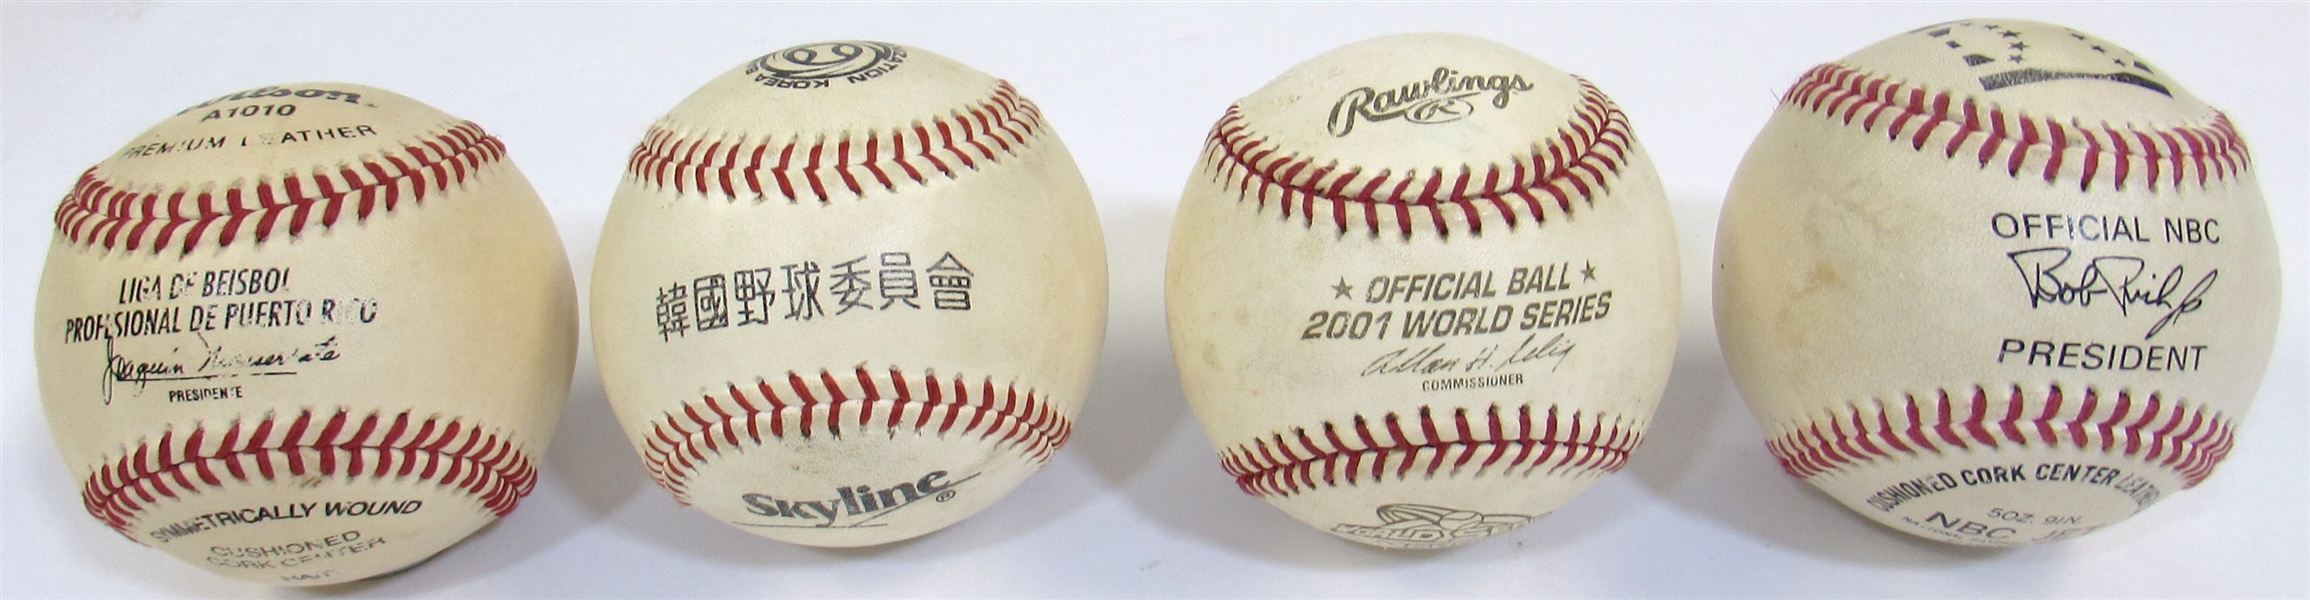 Lot Of 4-Game Used Baseballs (2001 WS, Korean League, N.B.C, & Puerto Rican League